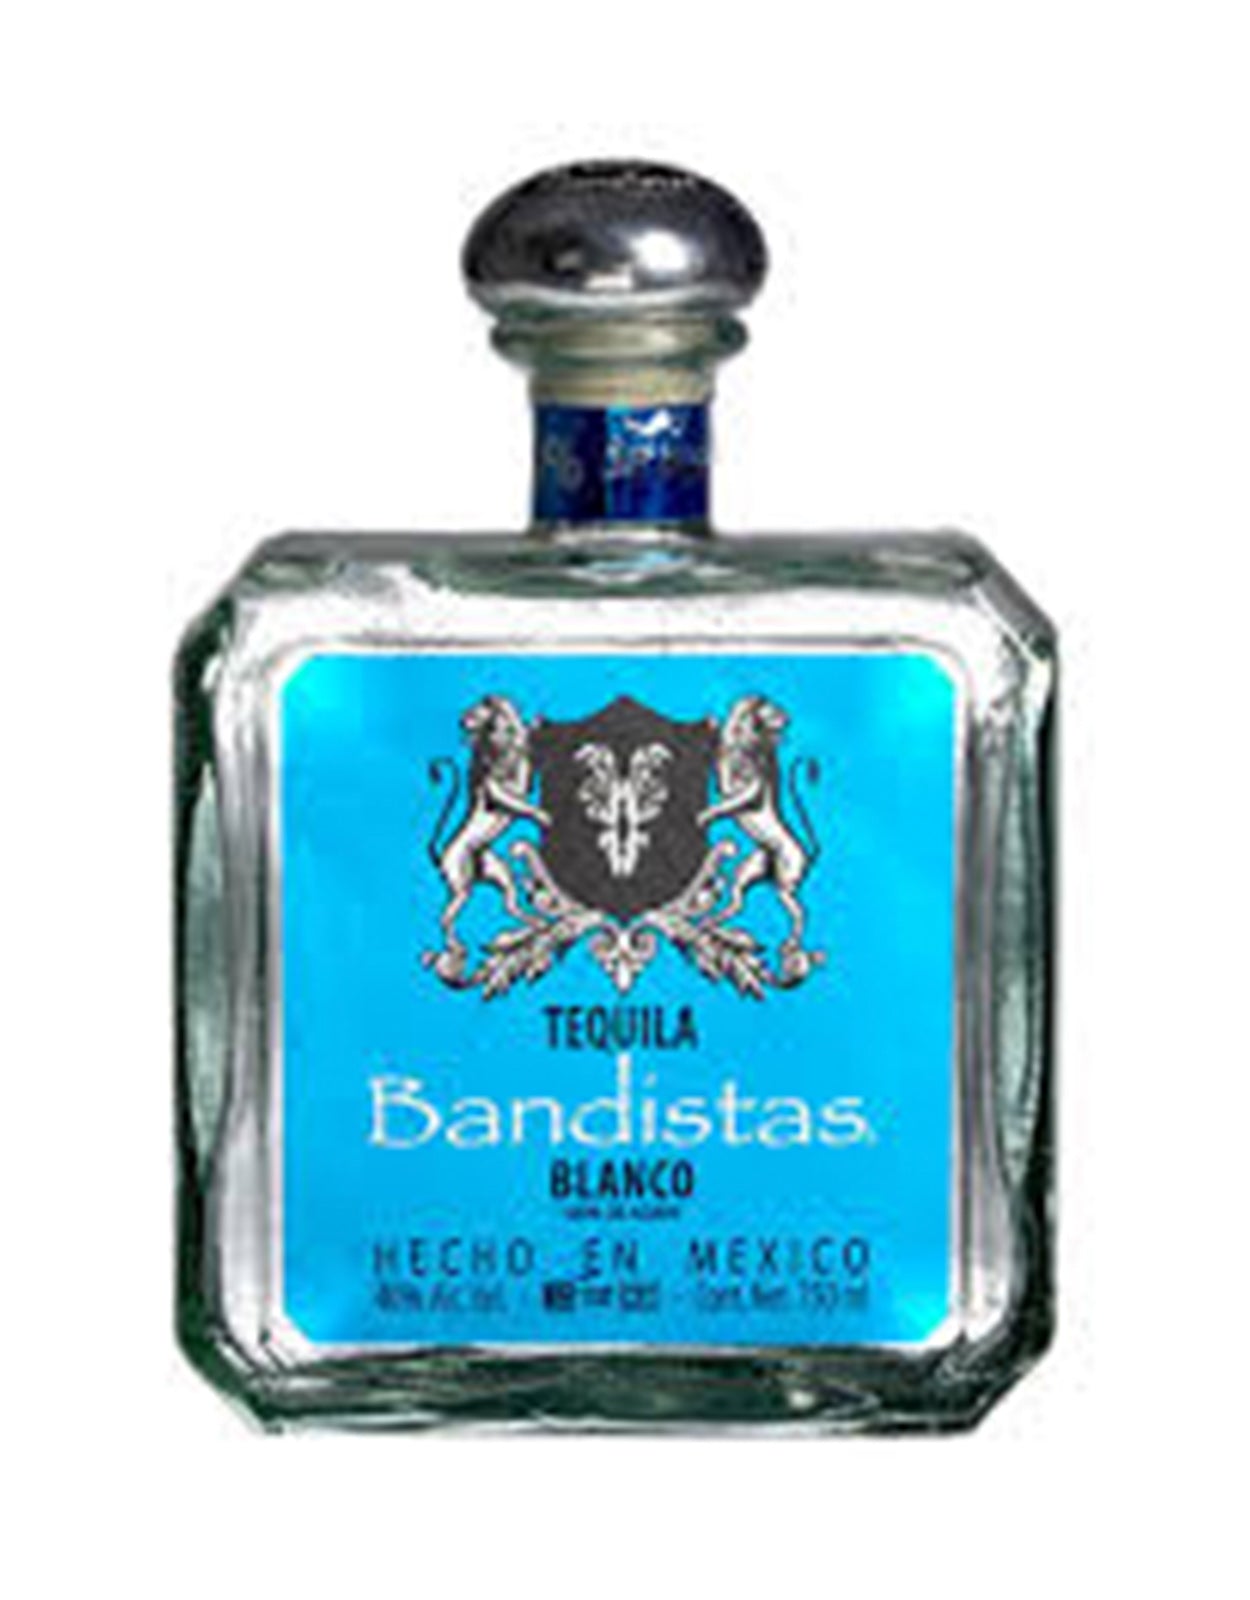 Bandistas Blanco Tequila